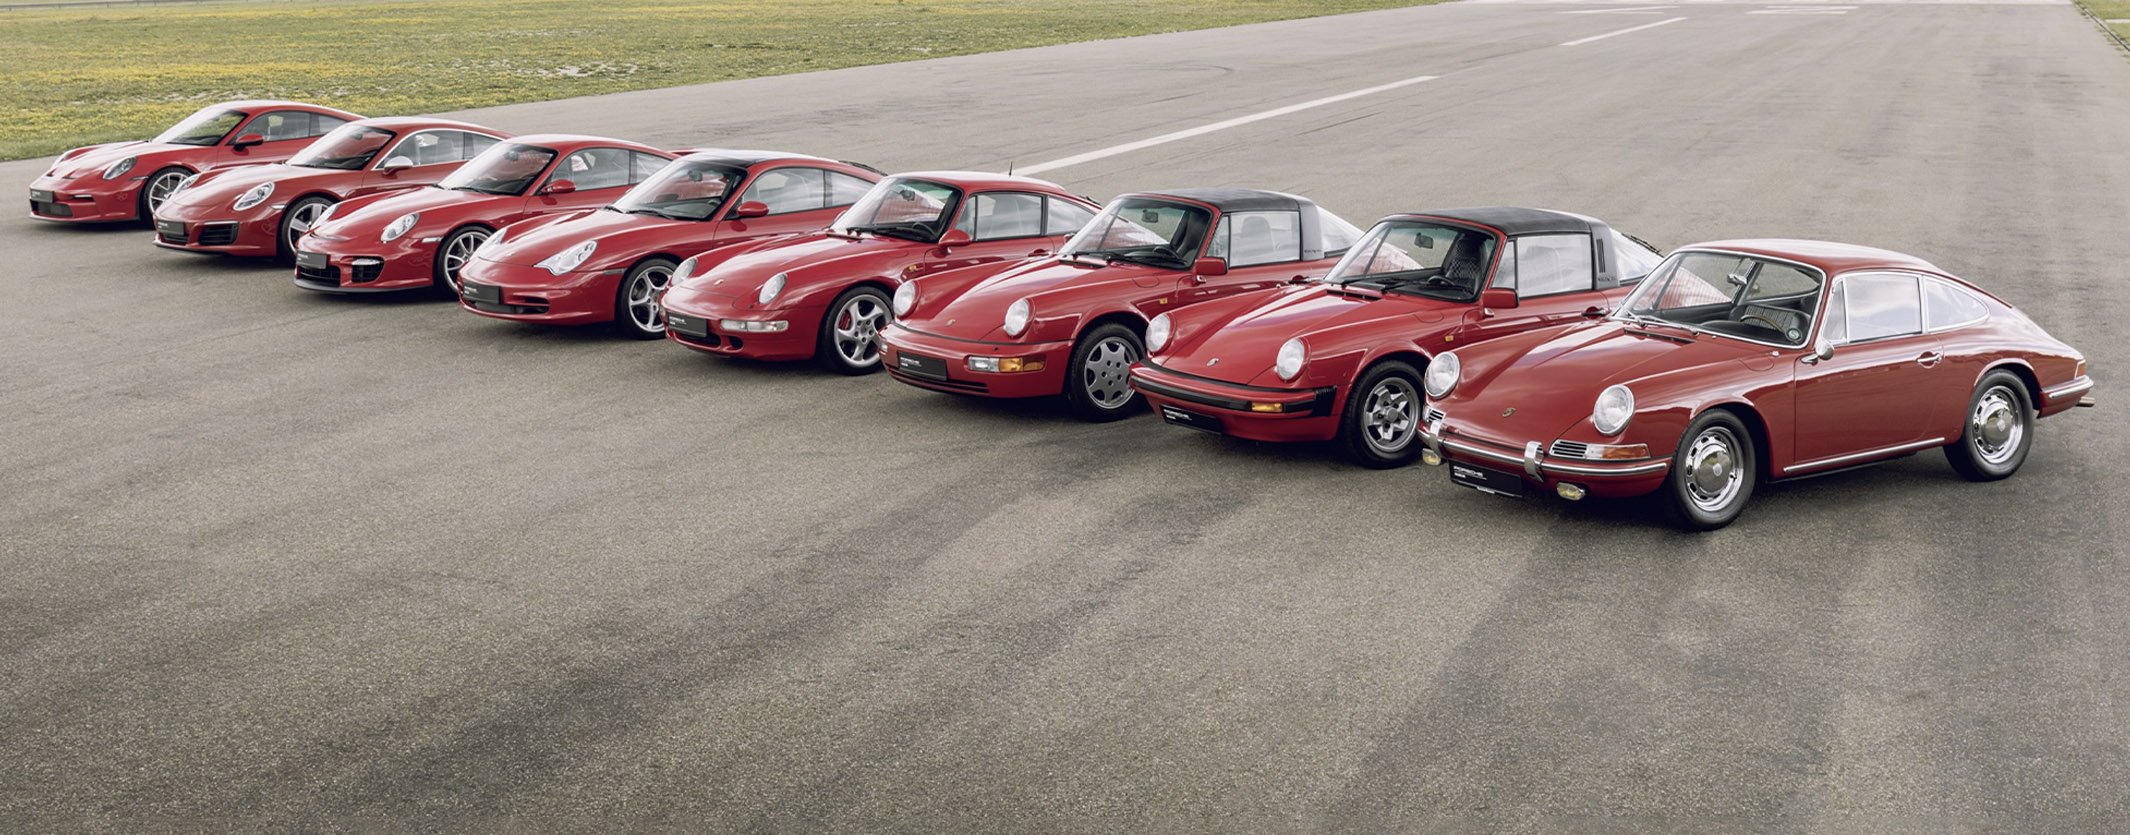 DubiCars Car Spotlight — Porsche 911: The Most Iconic Sports Car Ever Made?